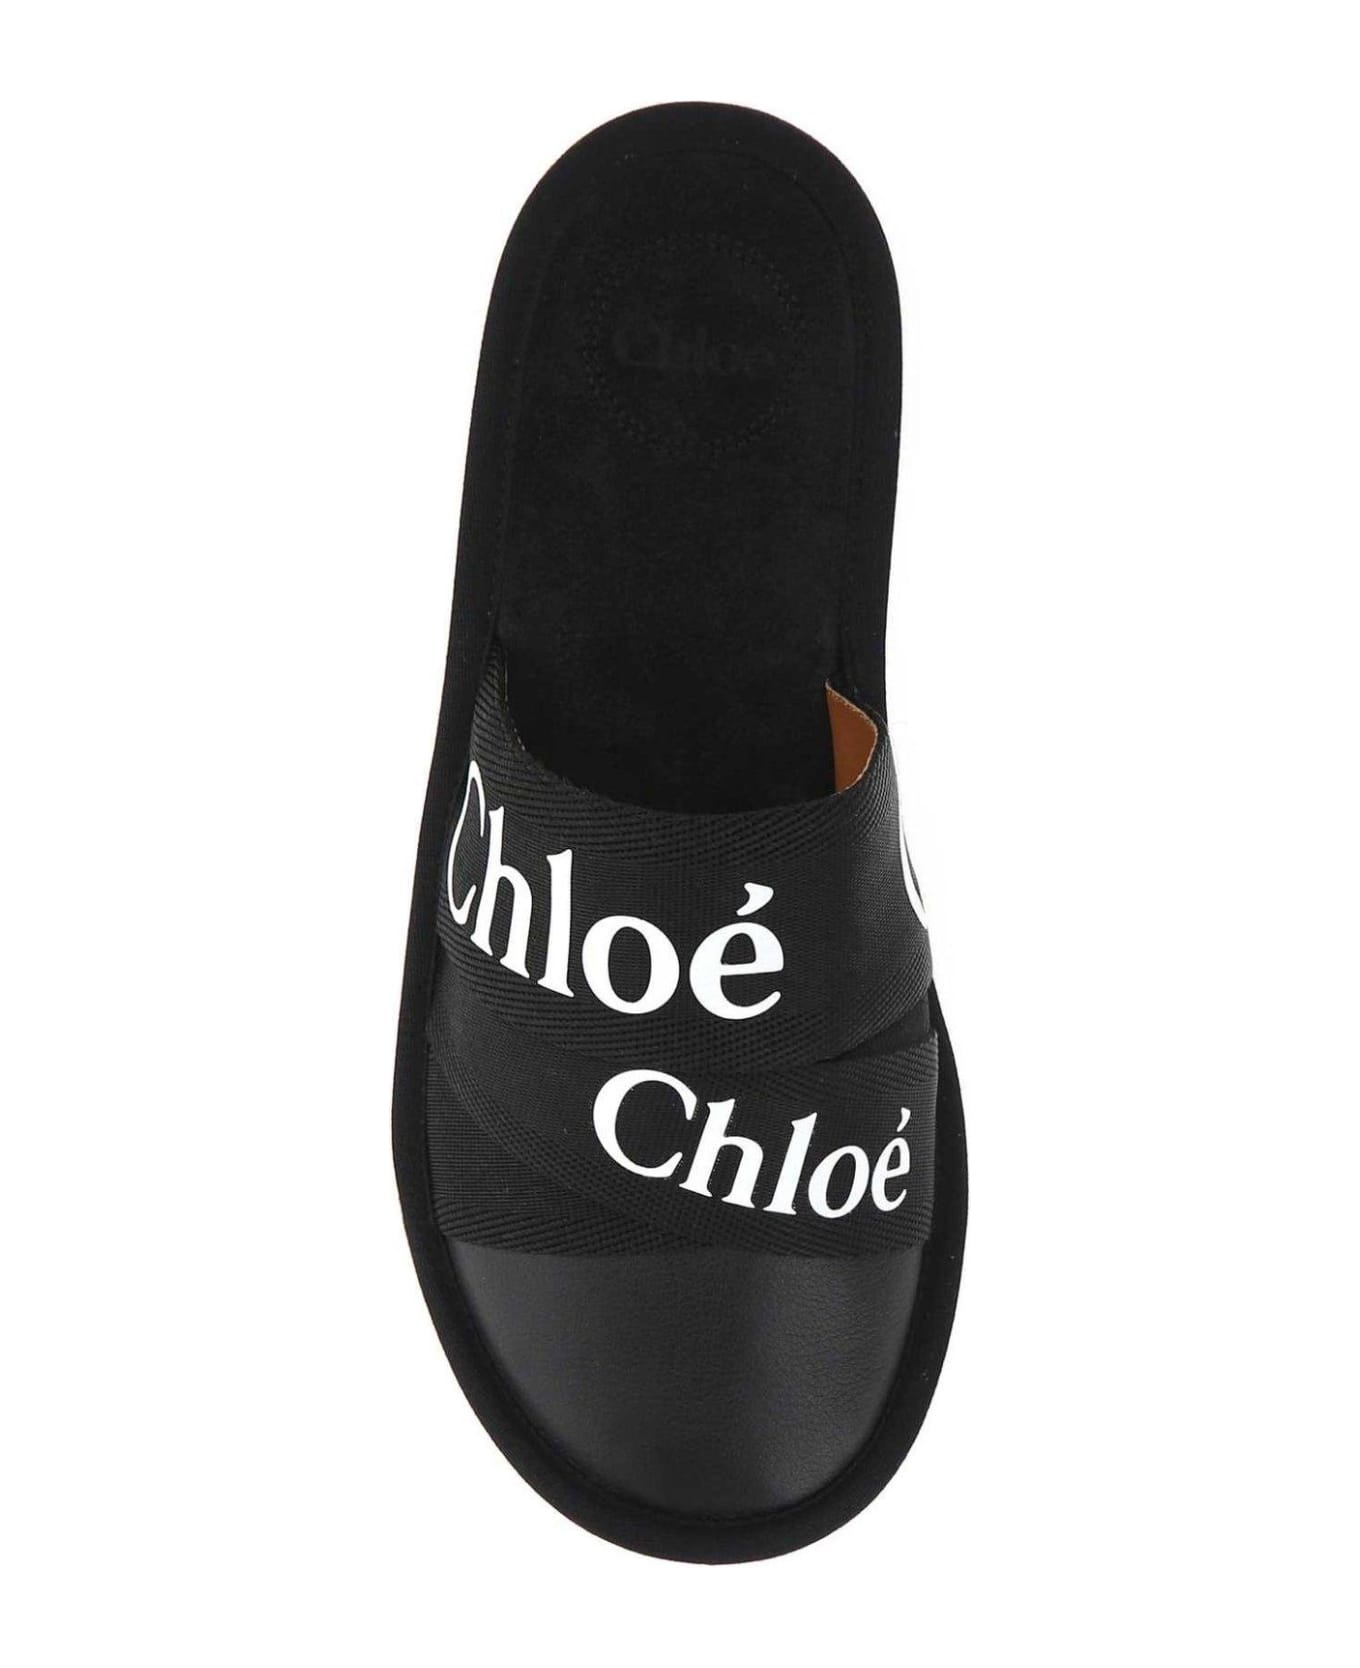 Chloé Logo Band Slippers - Black サンダル